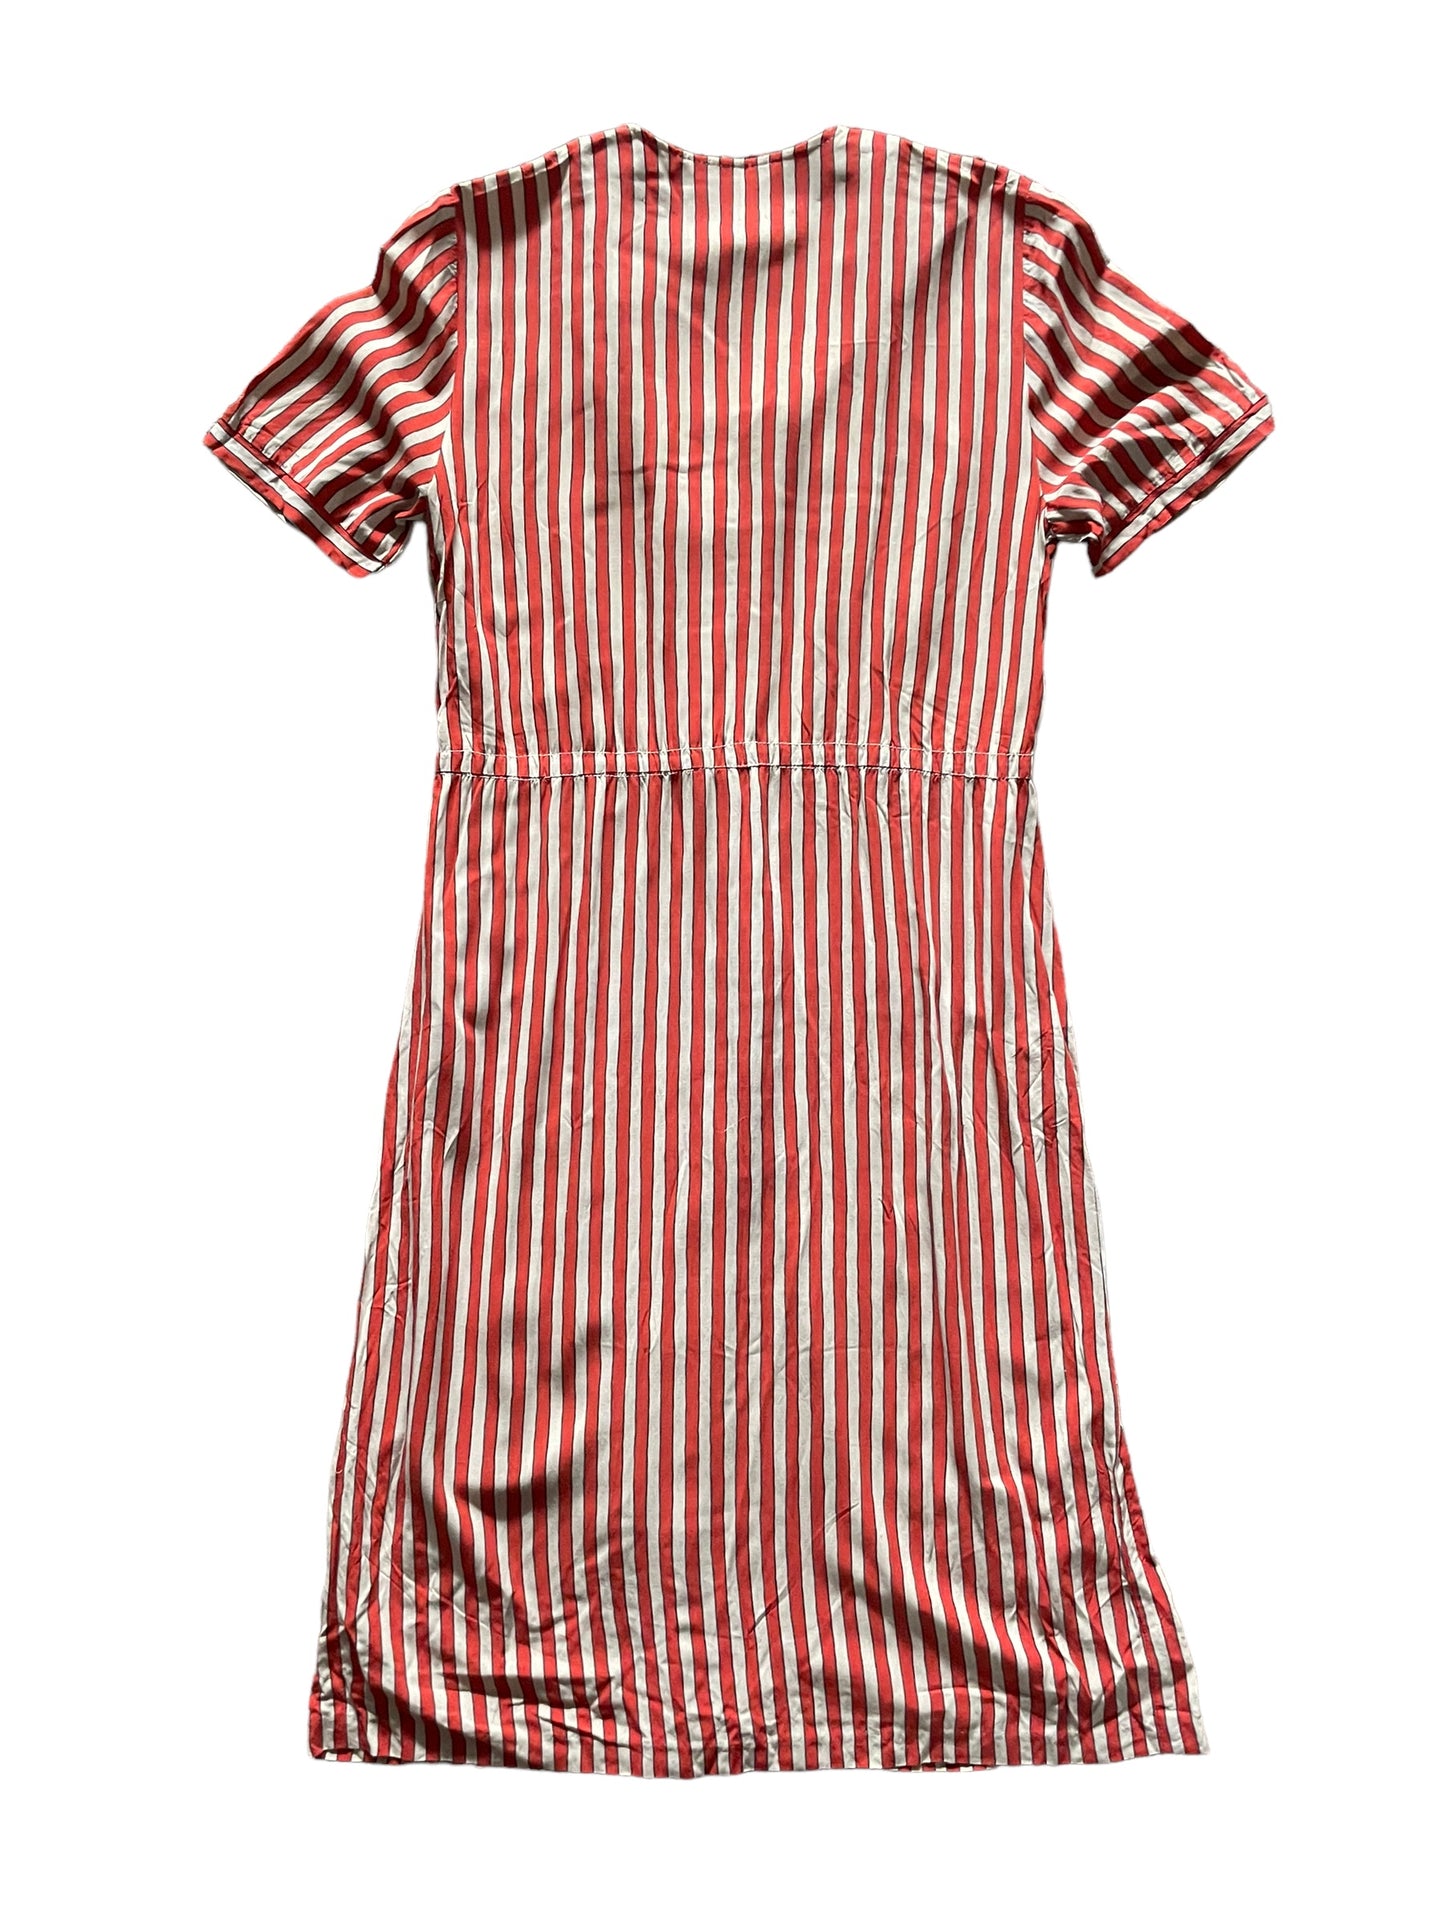 Full back view of Vintage Striped Rayon Dress SZ M |  Barn Owl Vintage Dresses| Seattle Vintage Ladies Clothing